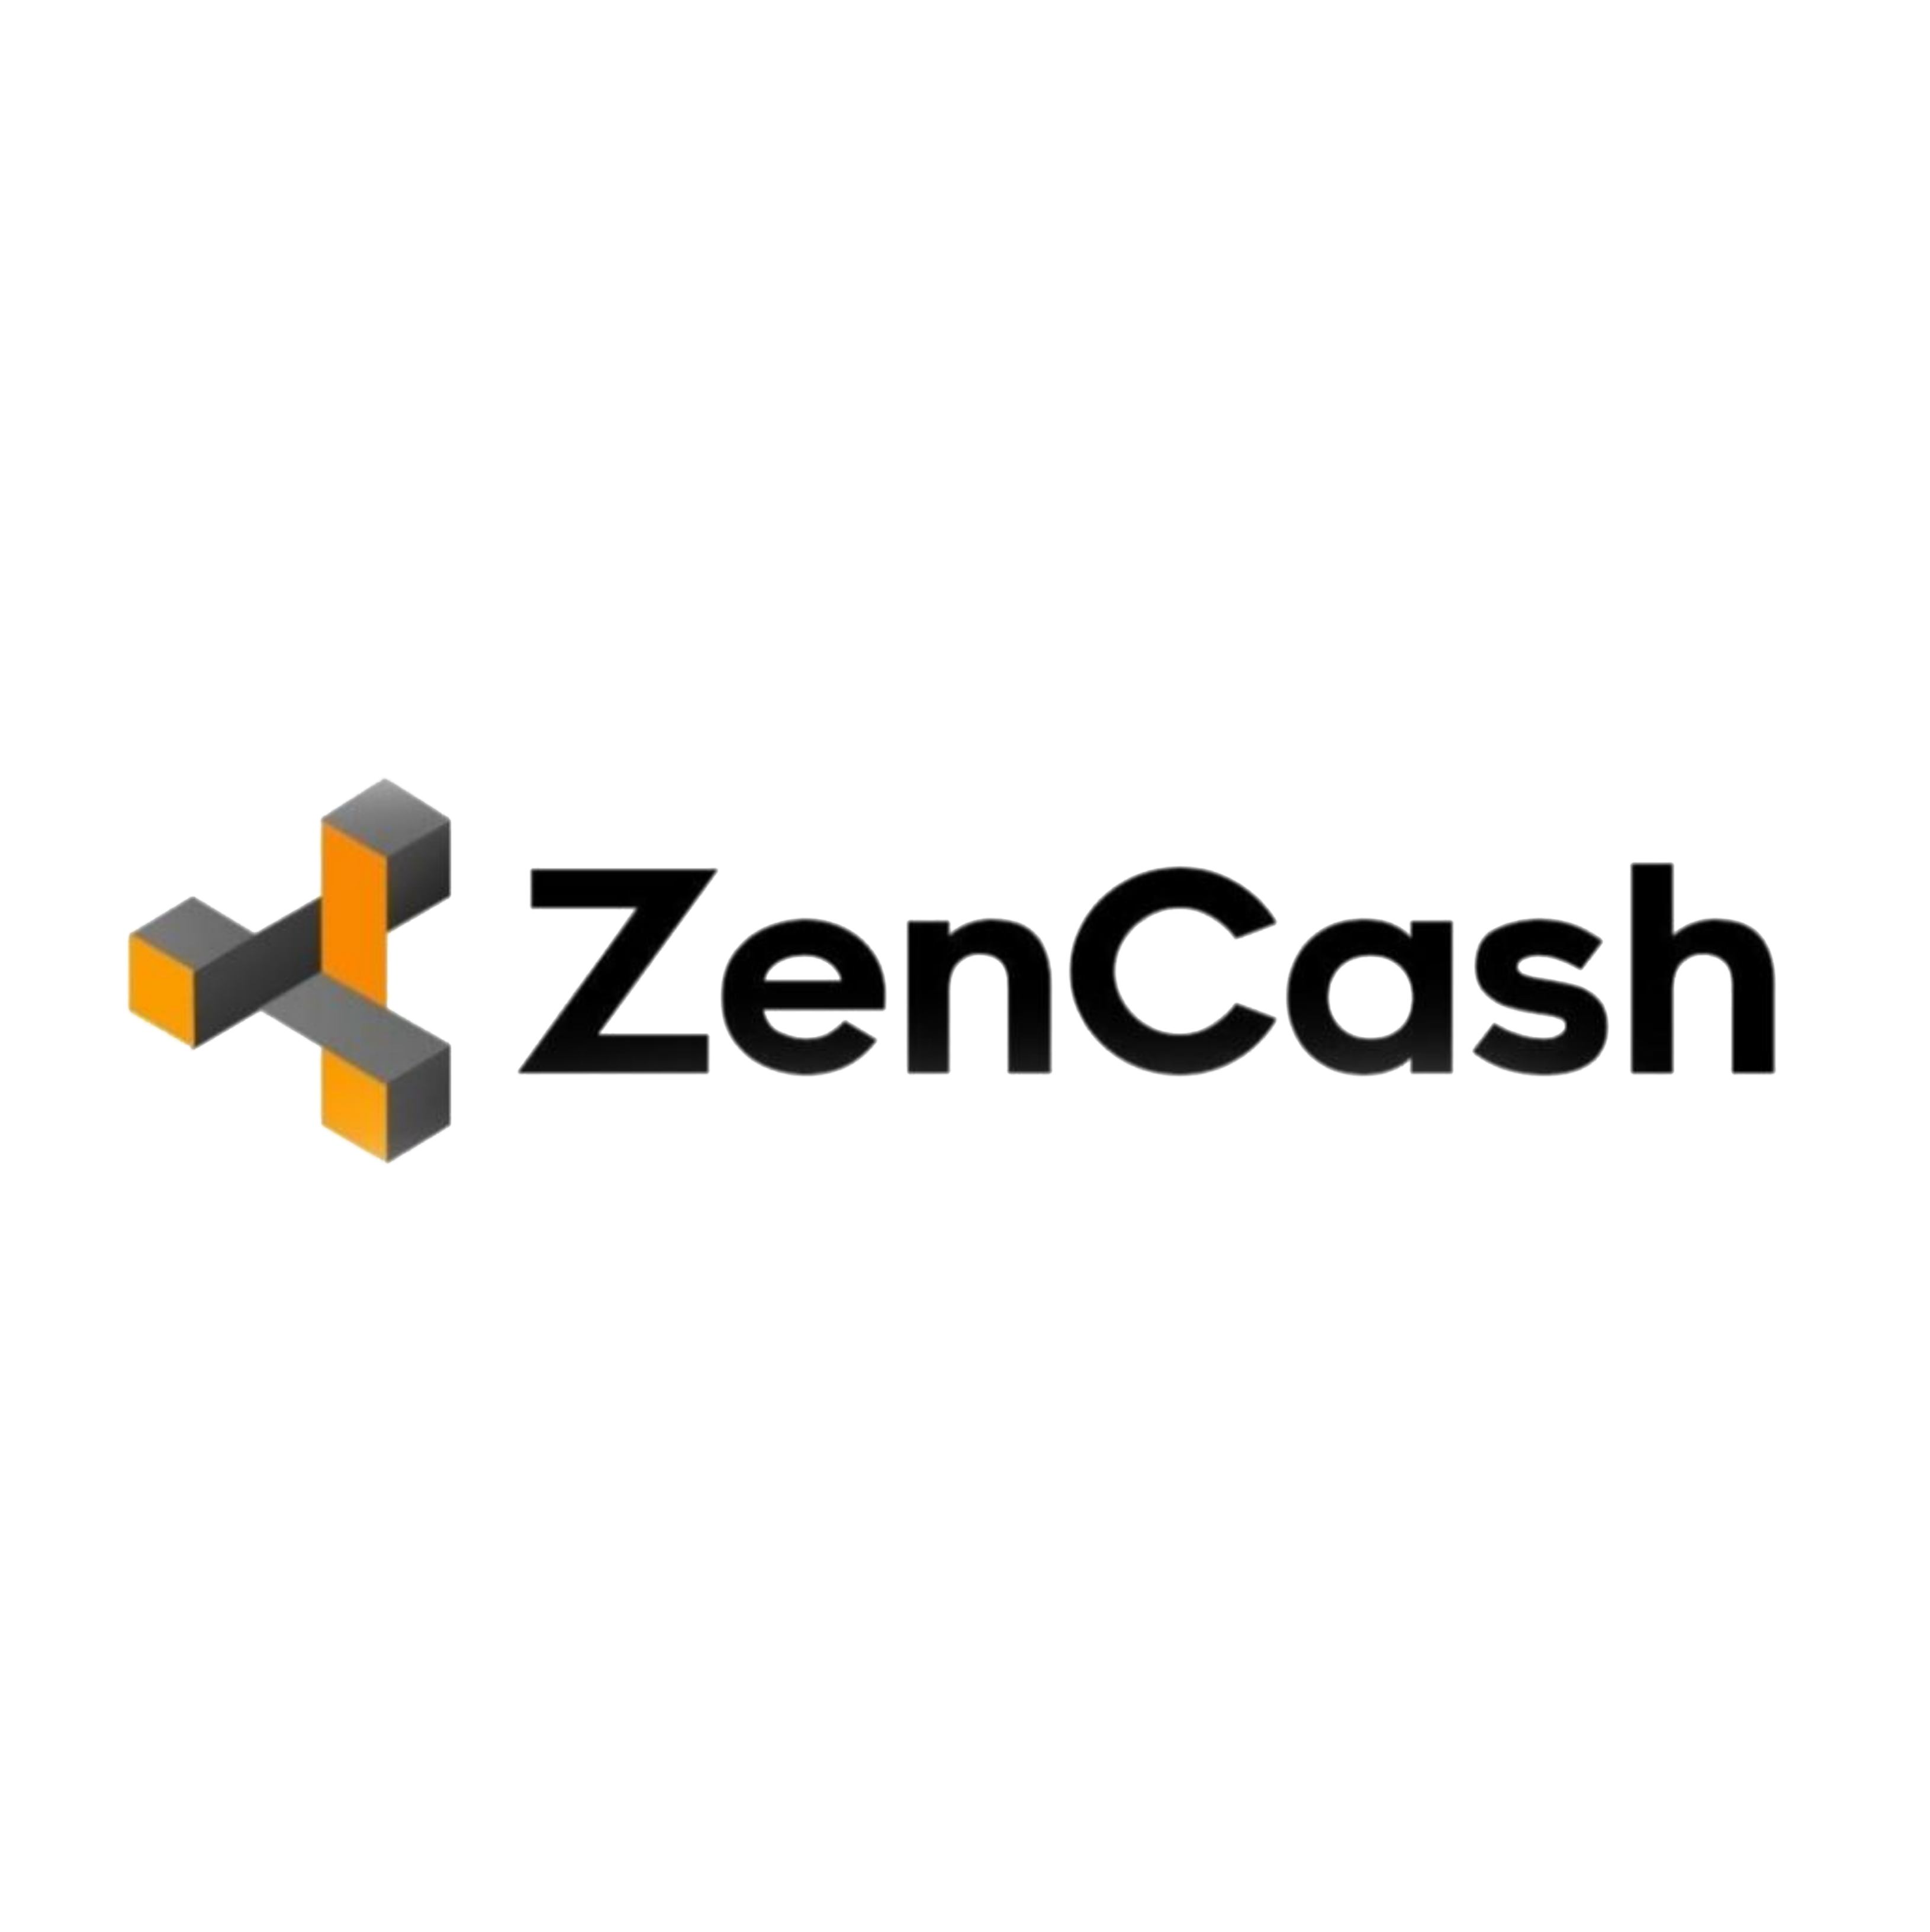 zencashbank logo